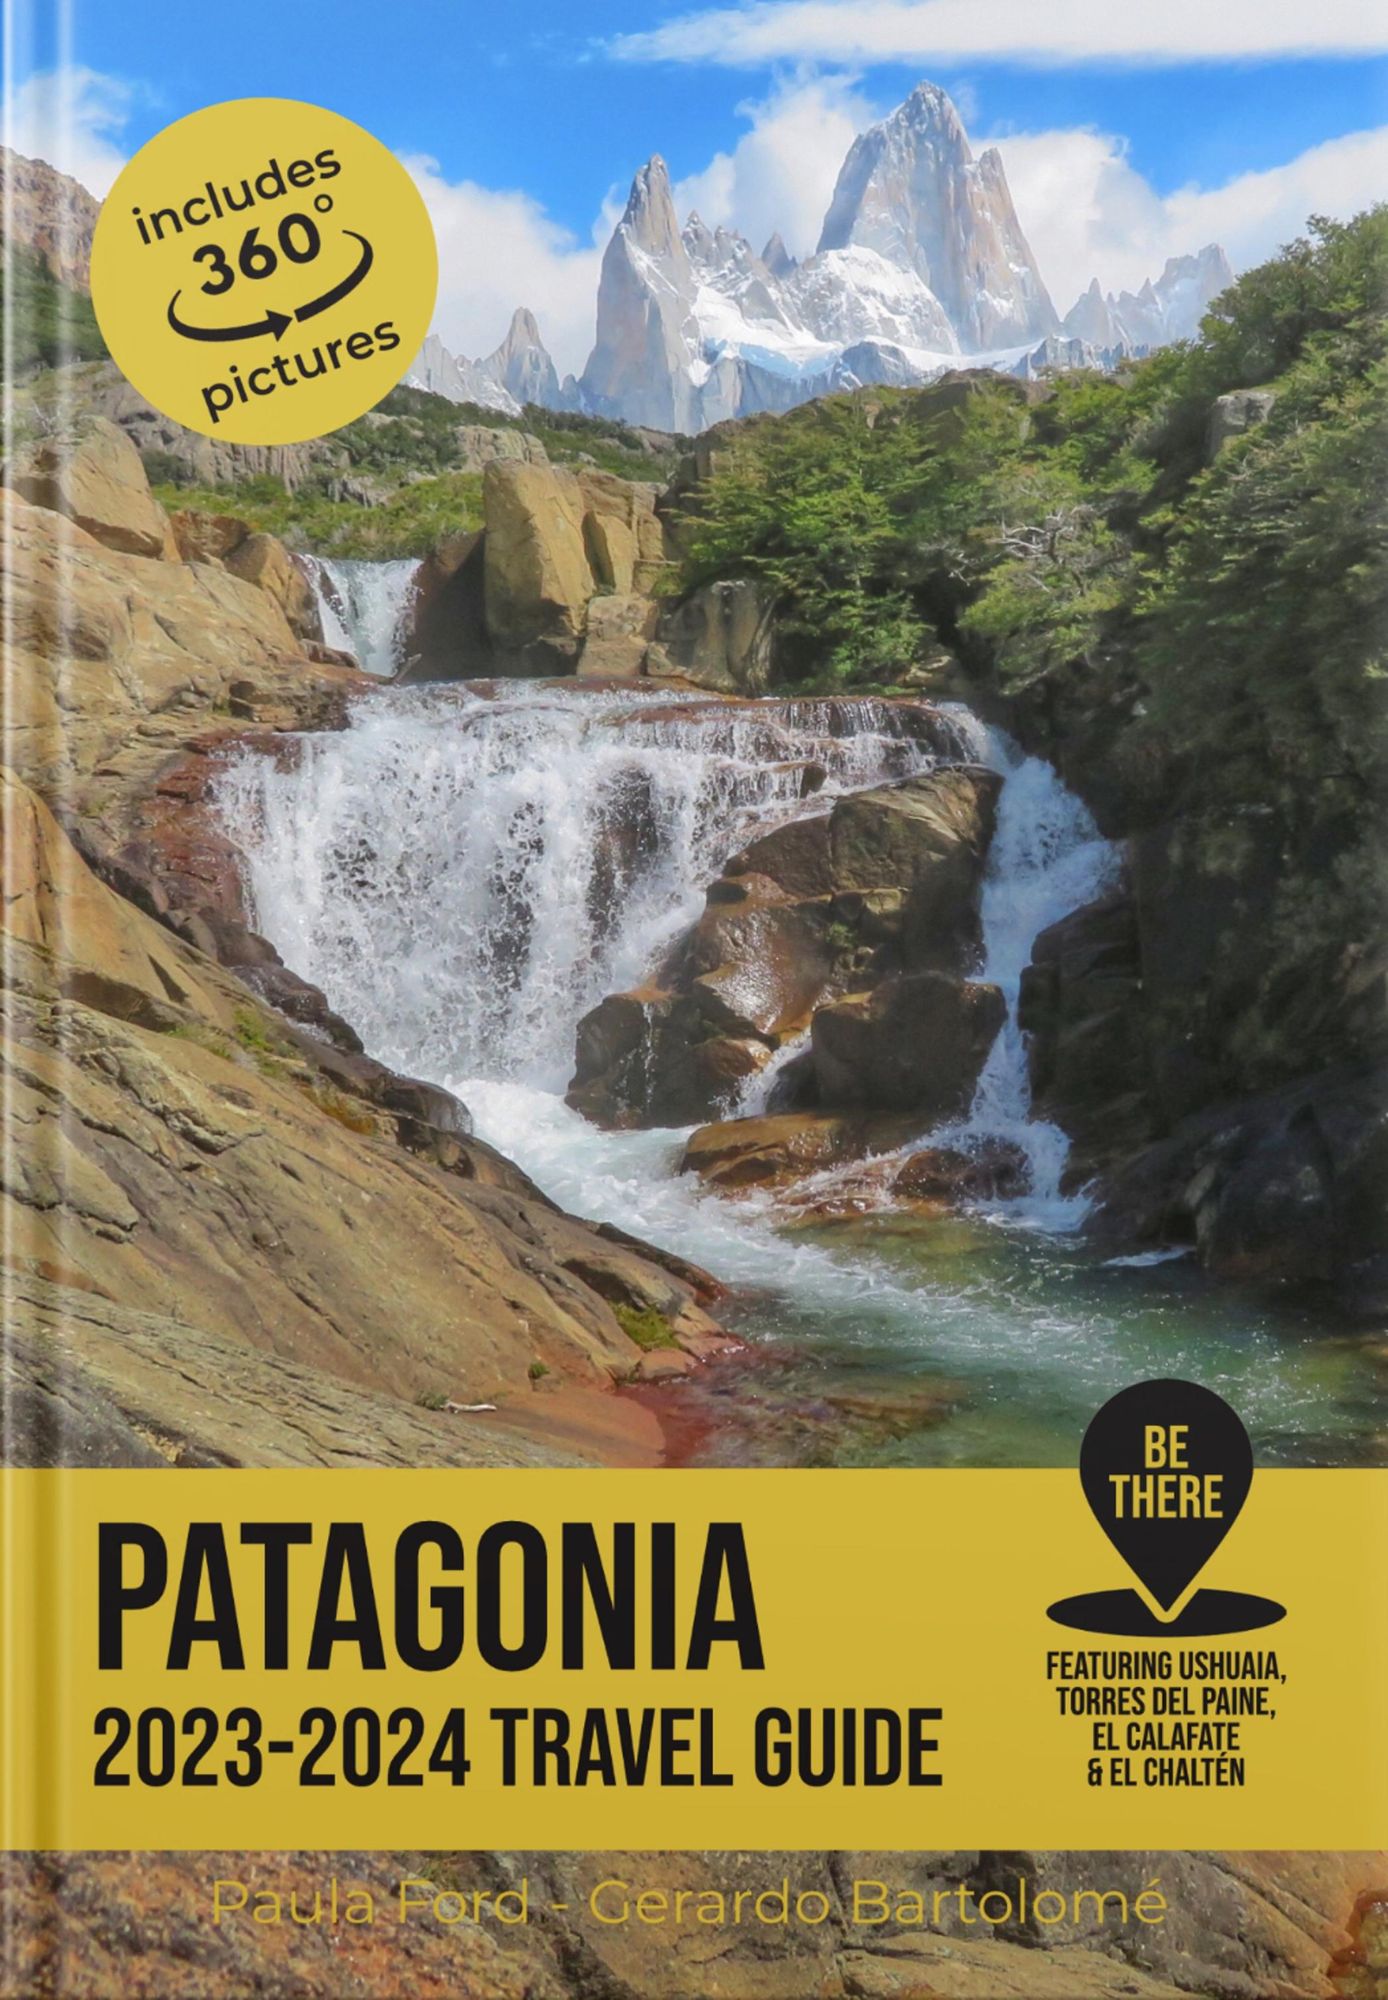 Travel Guide - Patagonia